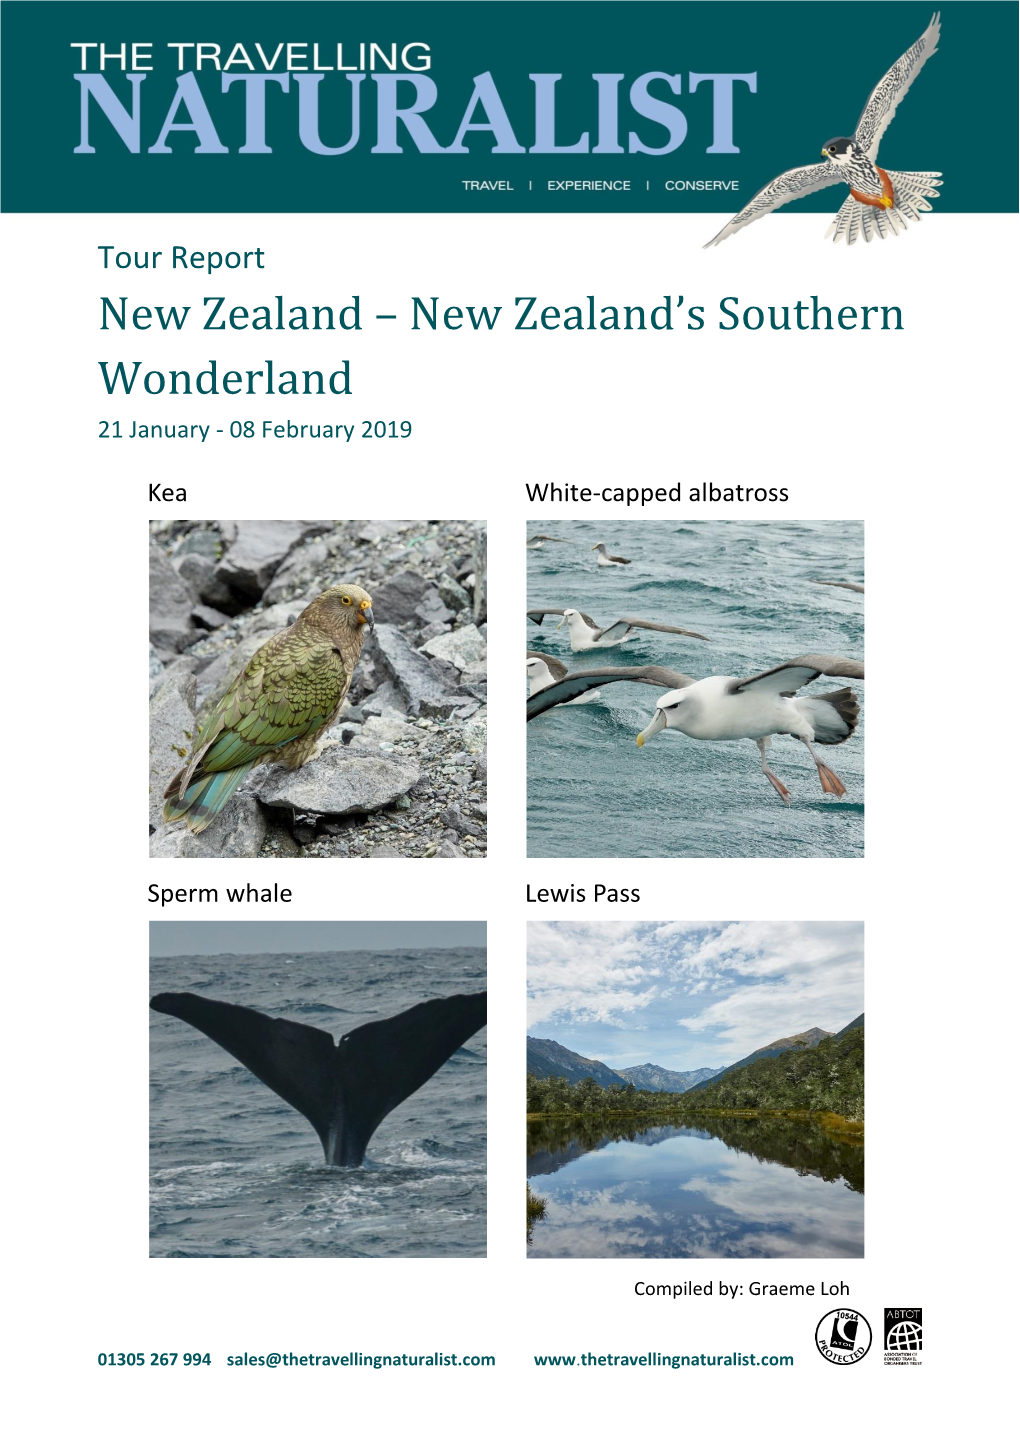 New Zealand's Southern Wonderland